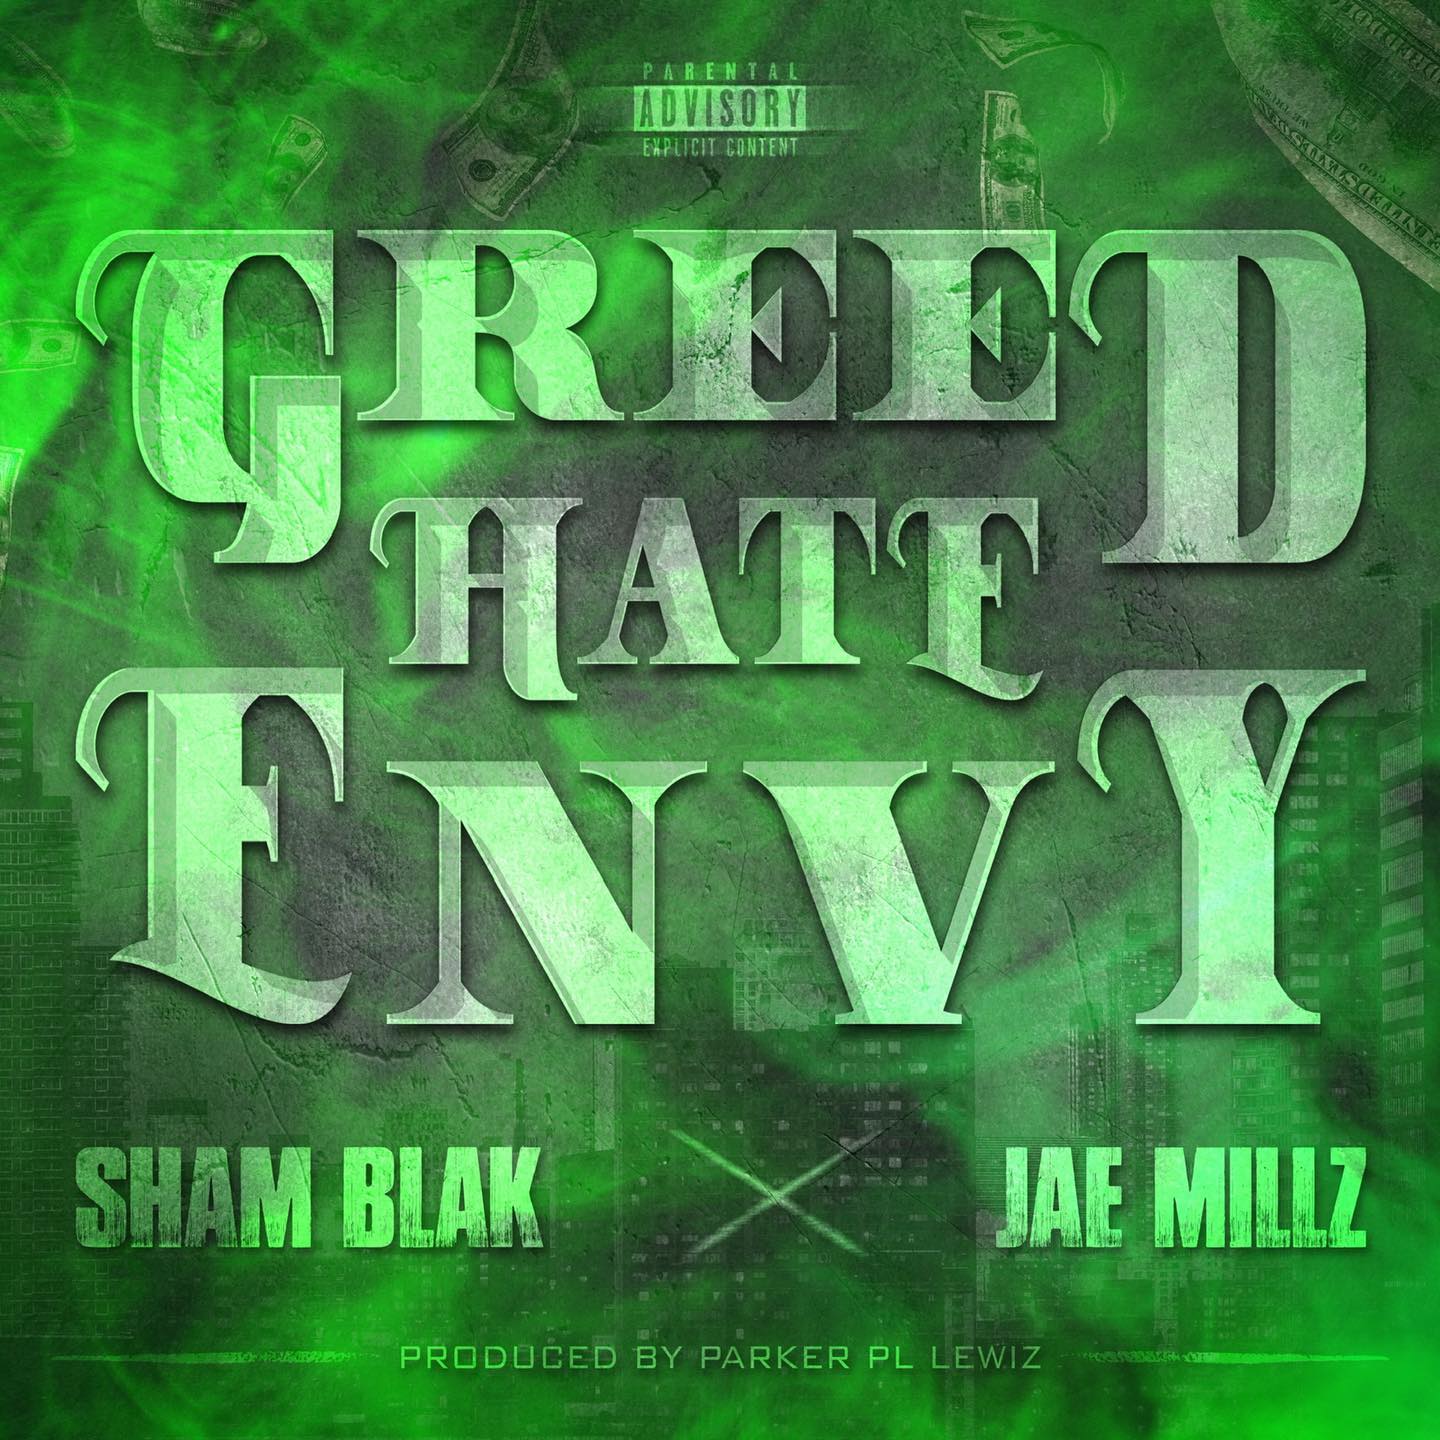 Sham Blak Feat. Jae Millz - Greed Hate Envy (Official Video)